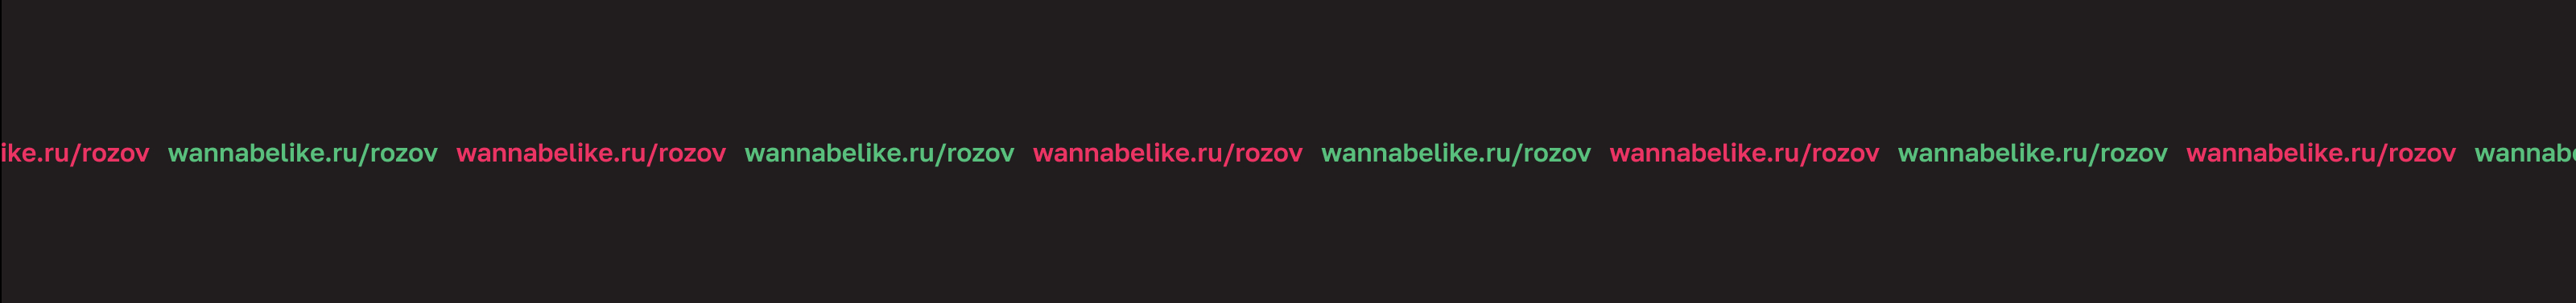 Wannabe Like's profile banner